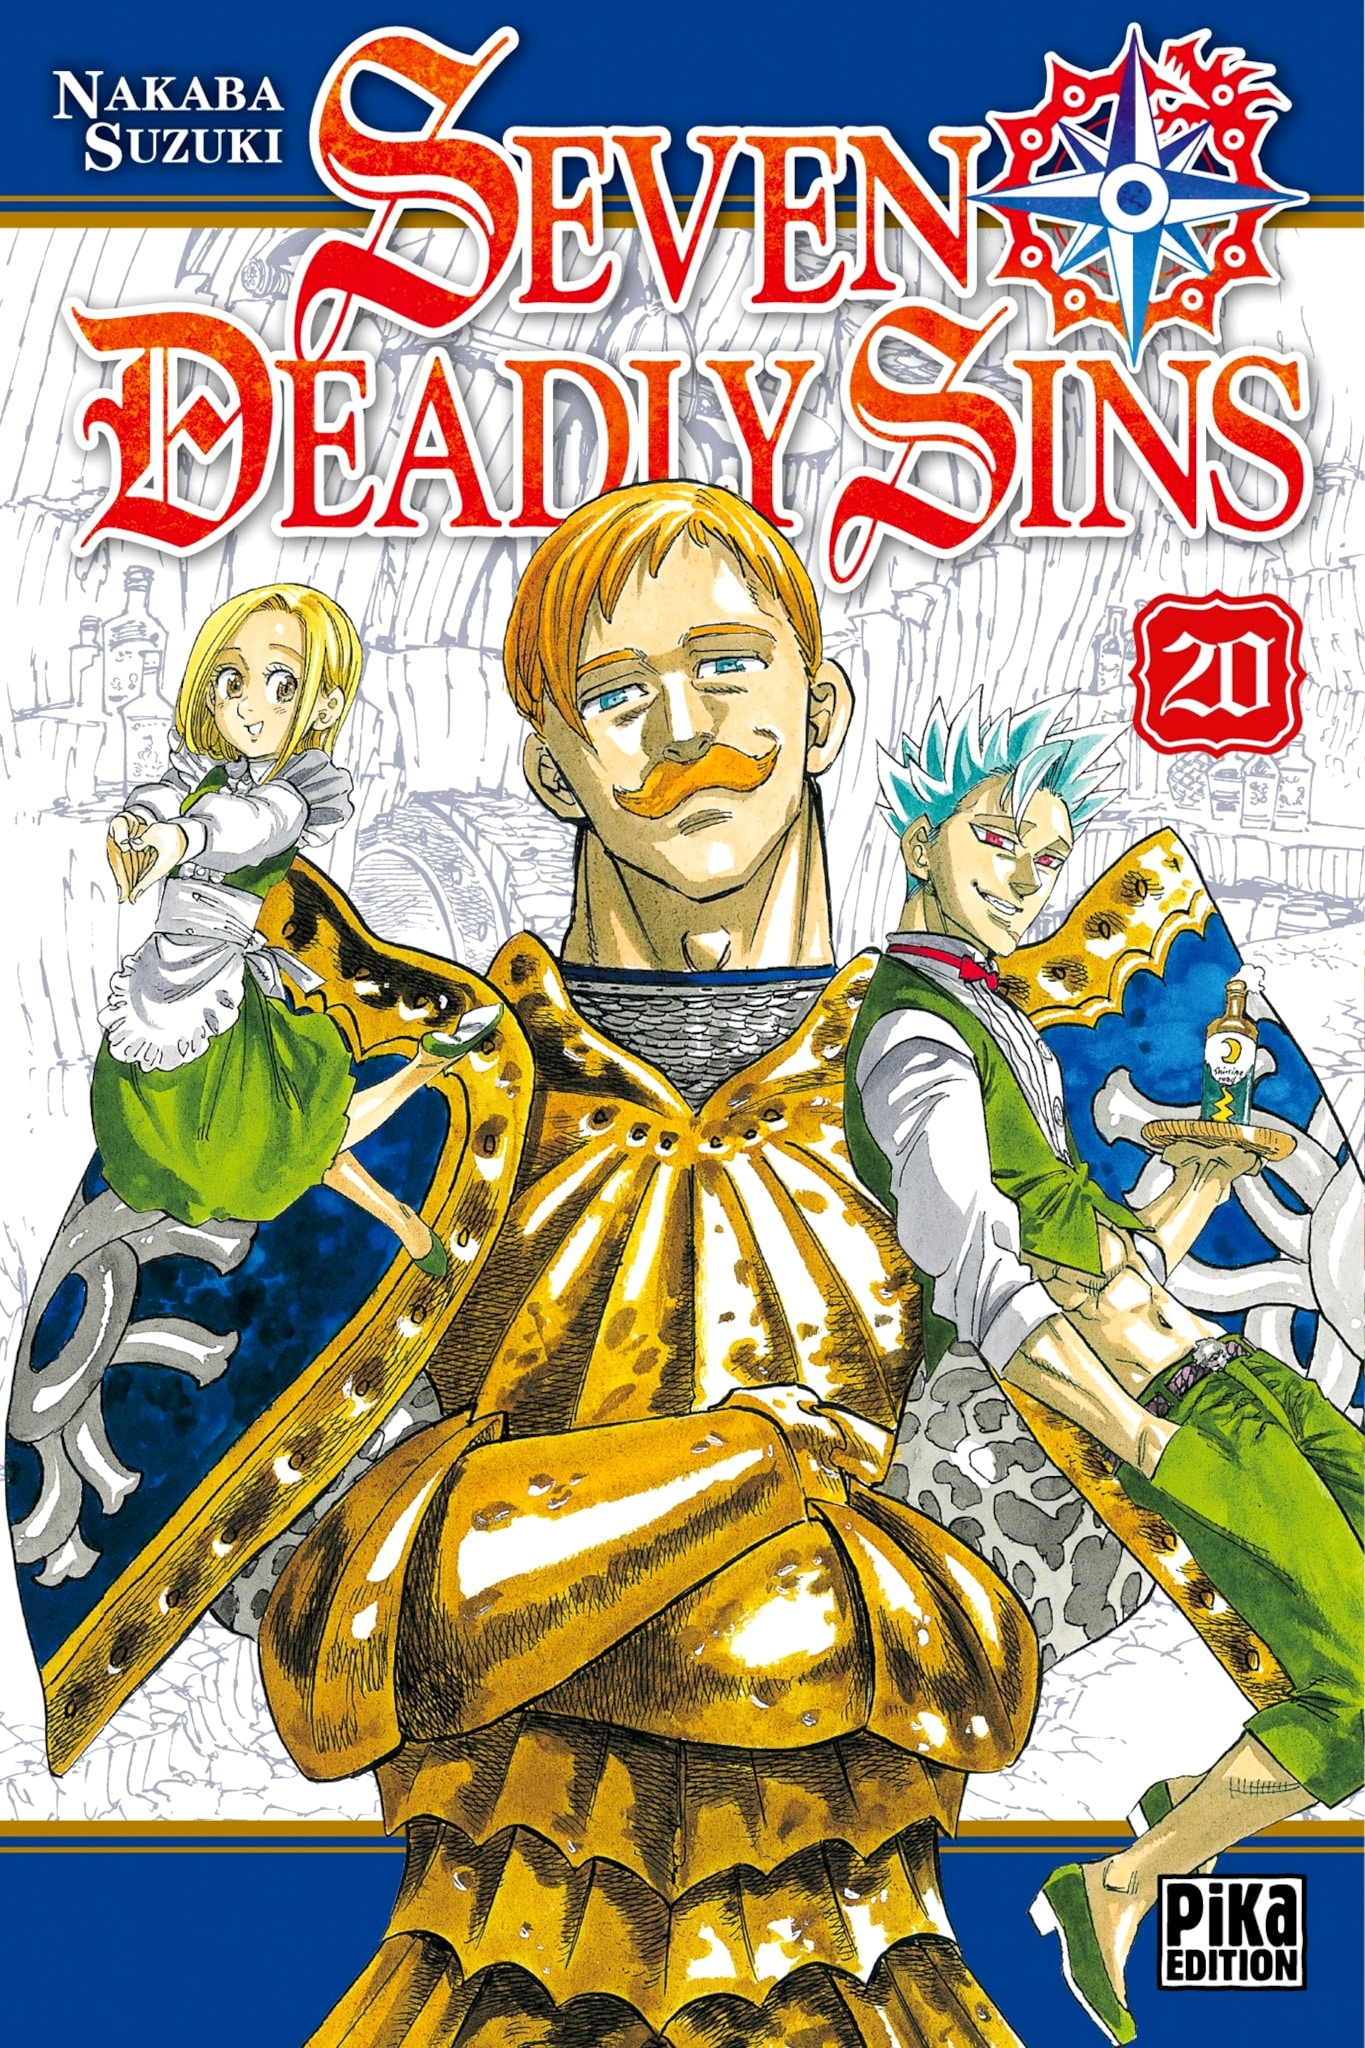 Tome 20 du manga The Seven Deadly Sins